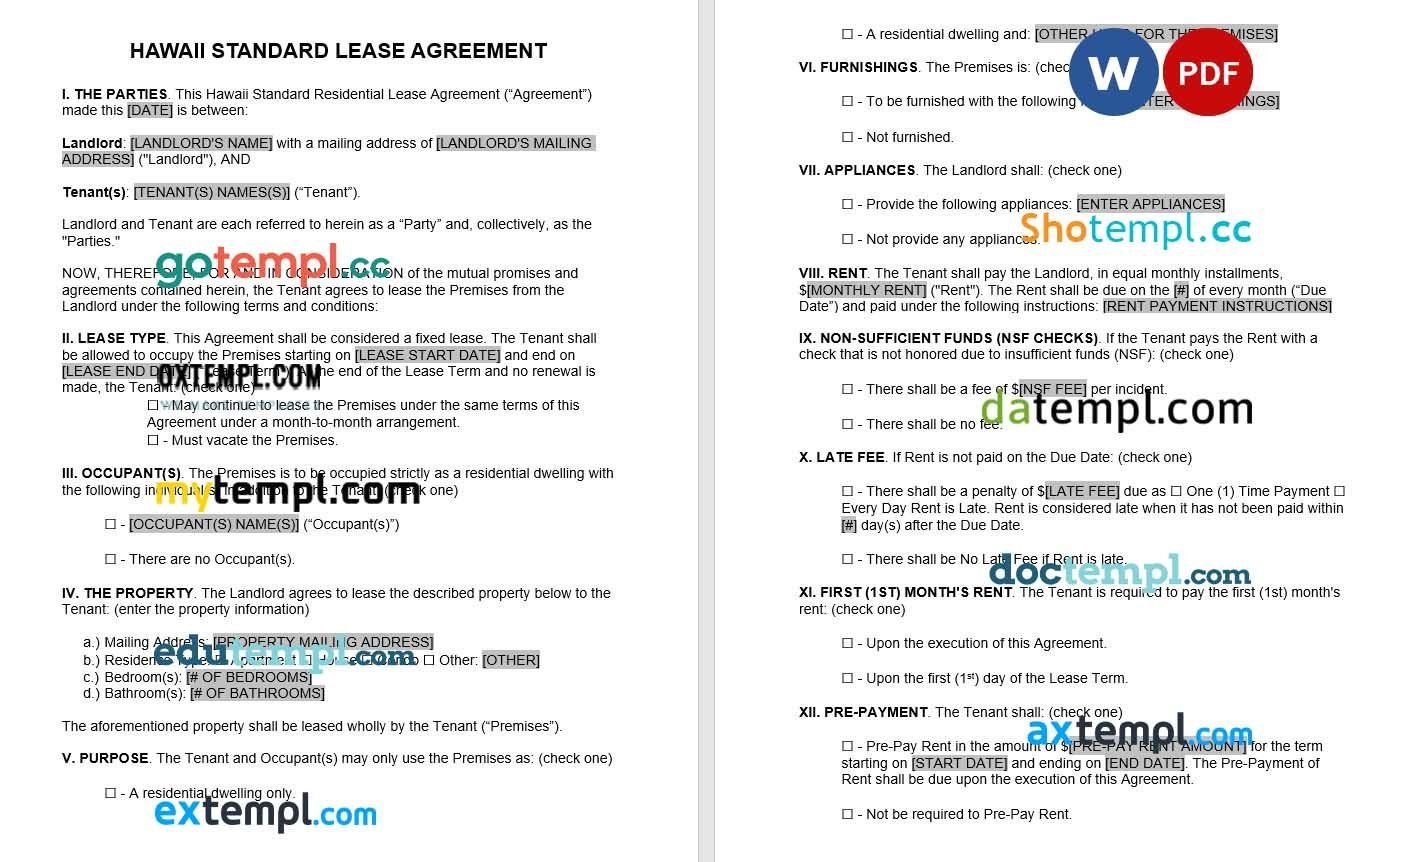 Hawaii Standard Lease Agreement Word example, fully editable